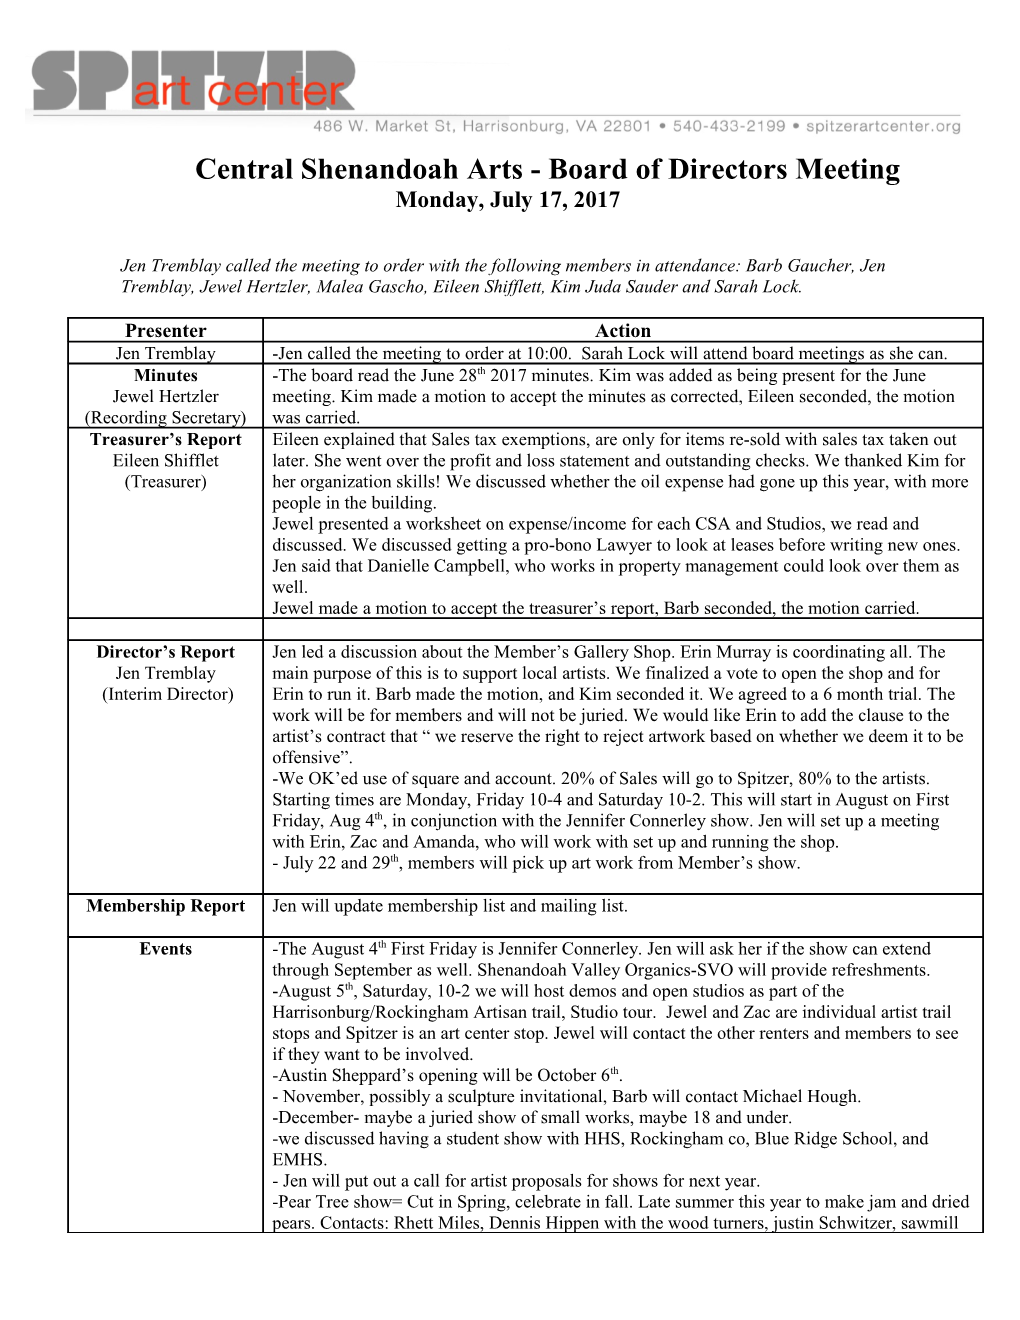 Central Shenandoah Arts - Board of Directors Meeting